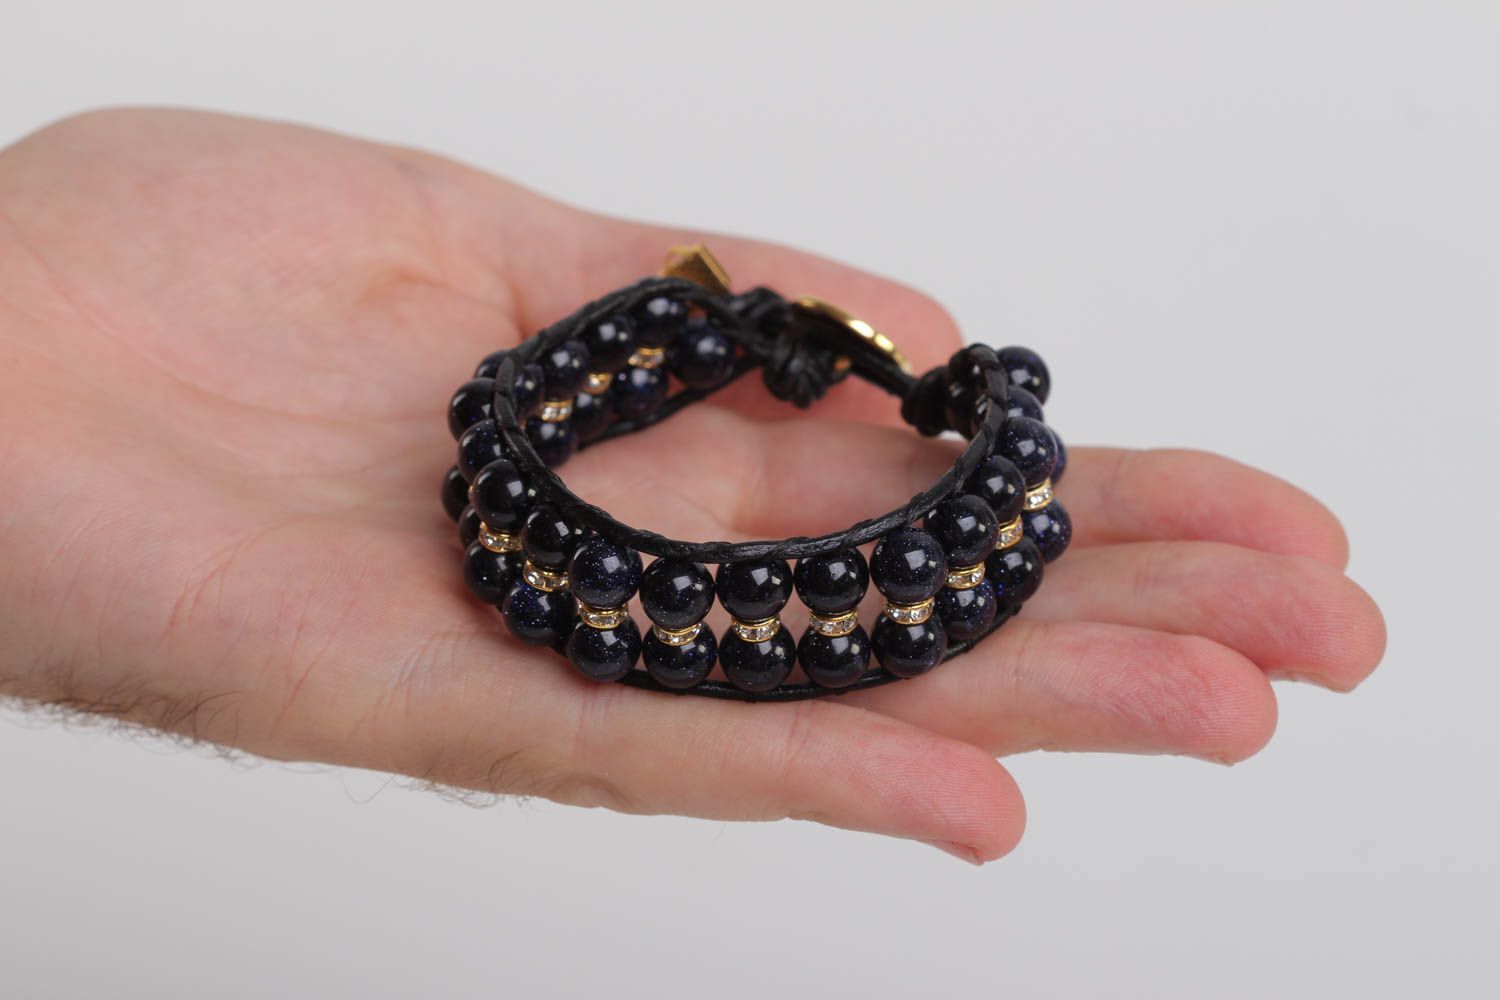 Beautiful handmade wrist bracelet designs gemstone bead bracelet gifts for her photo 5